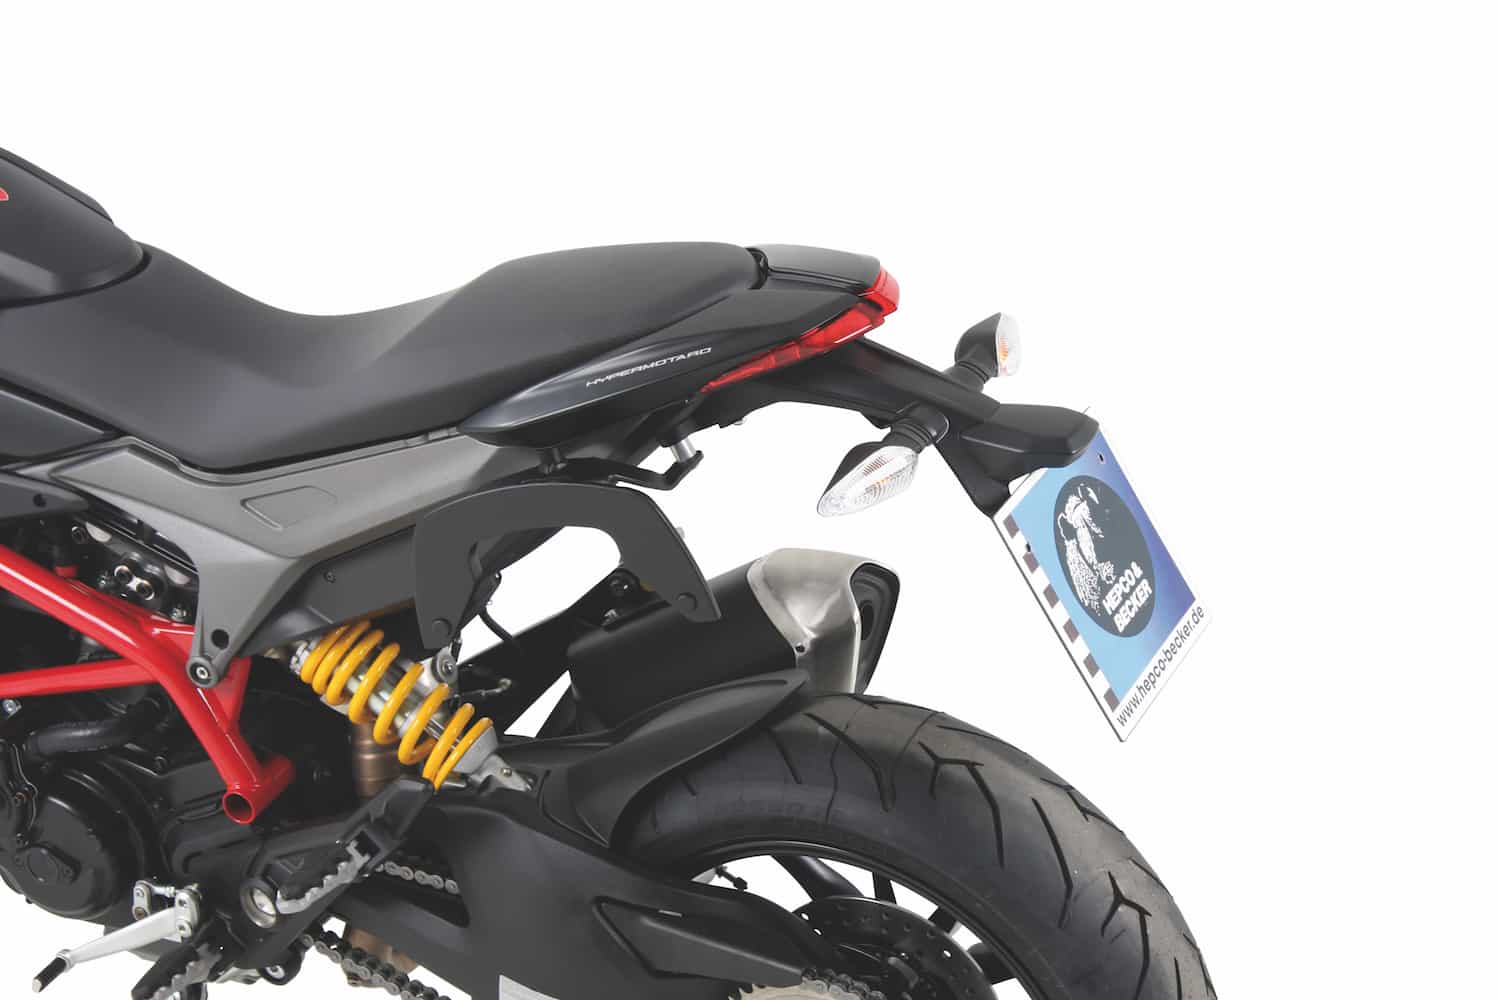 C-Bow sidecarrier for Ducati Hypermotard 939/SP (2016-2018)